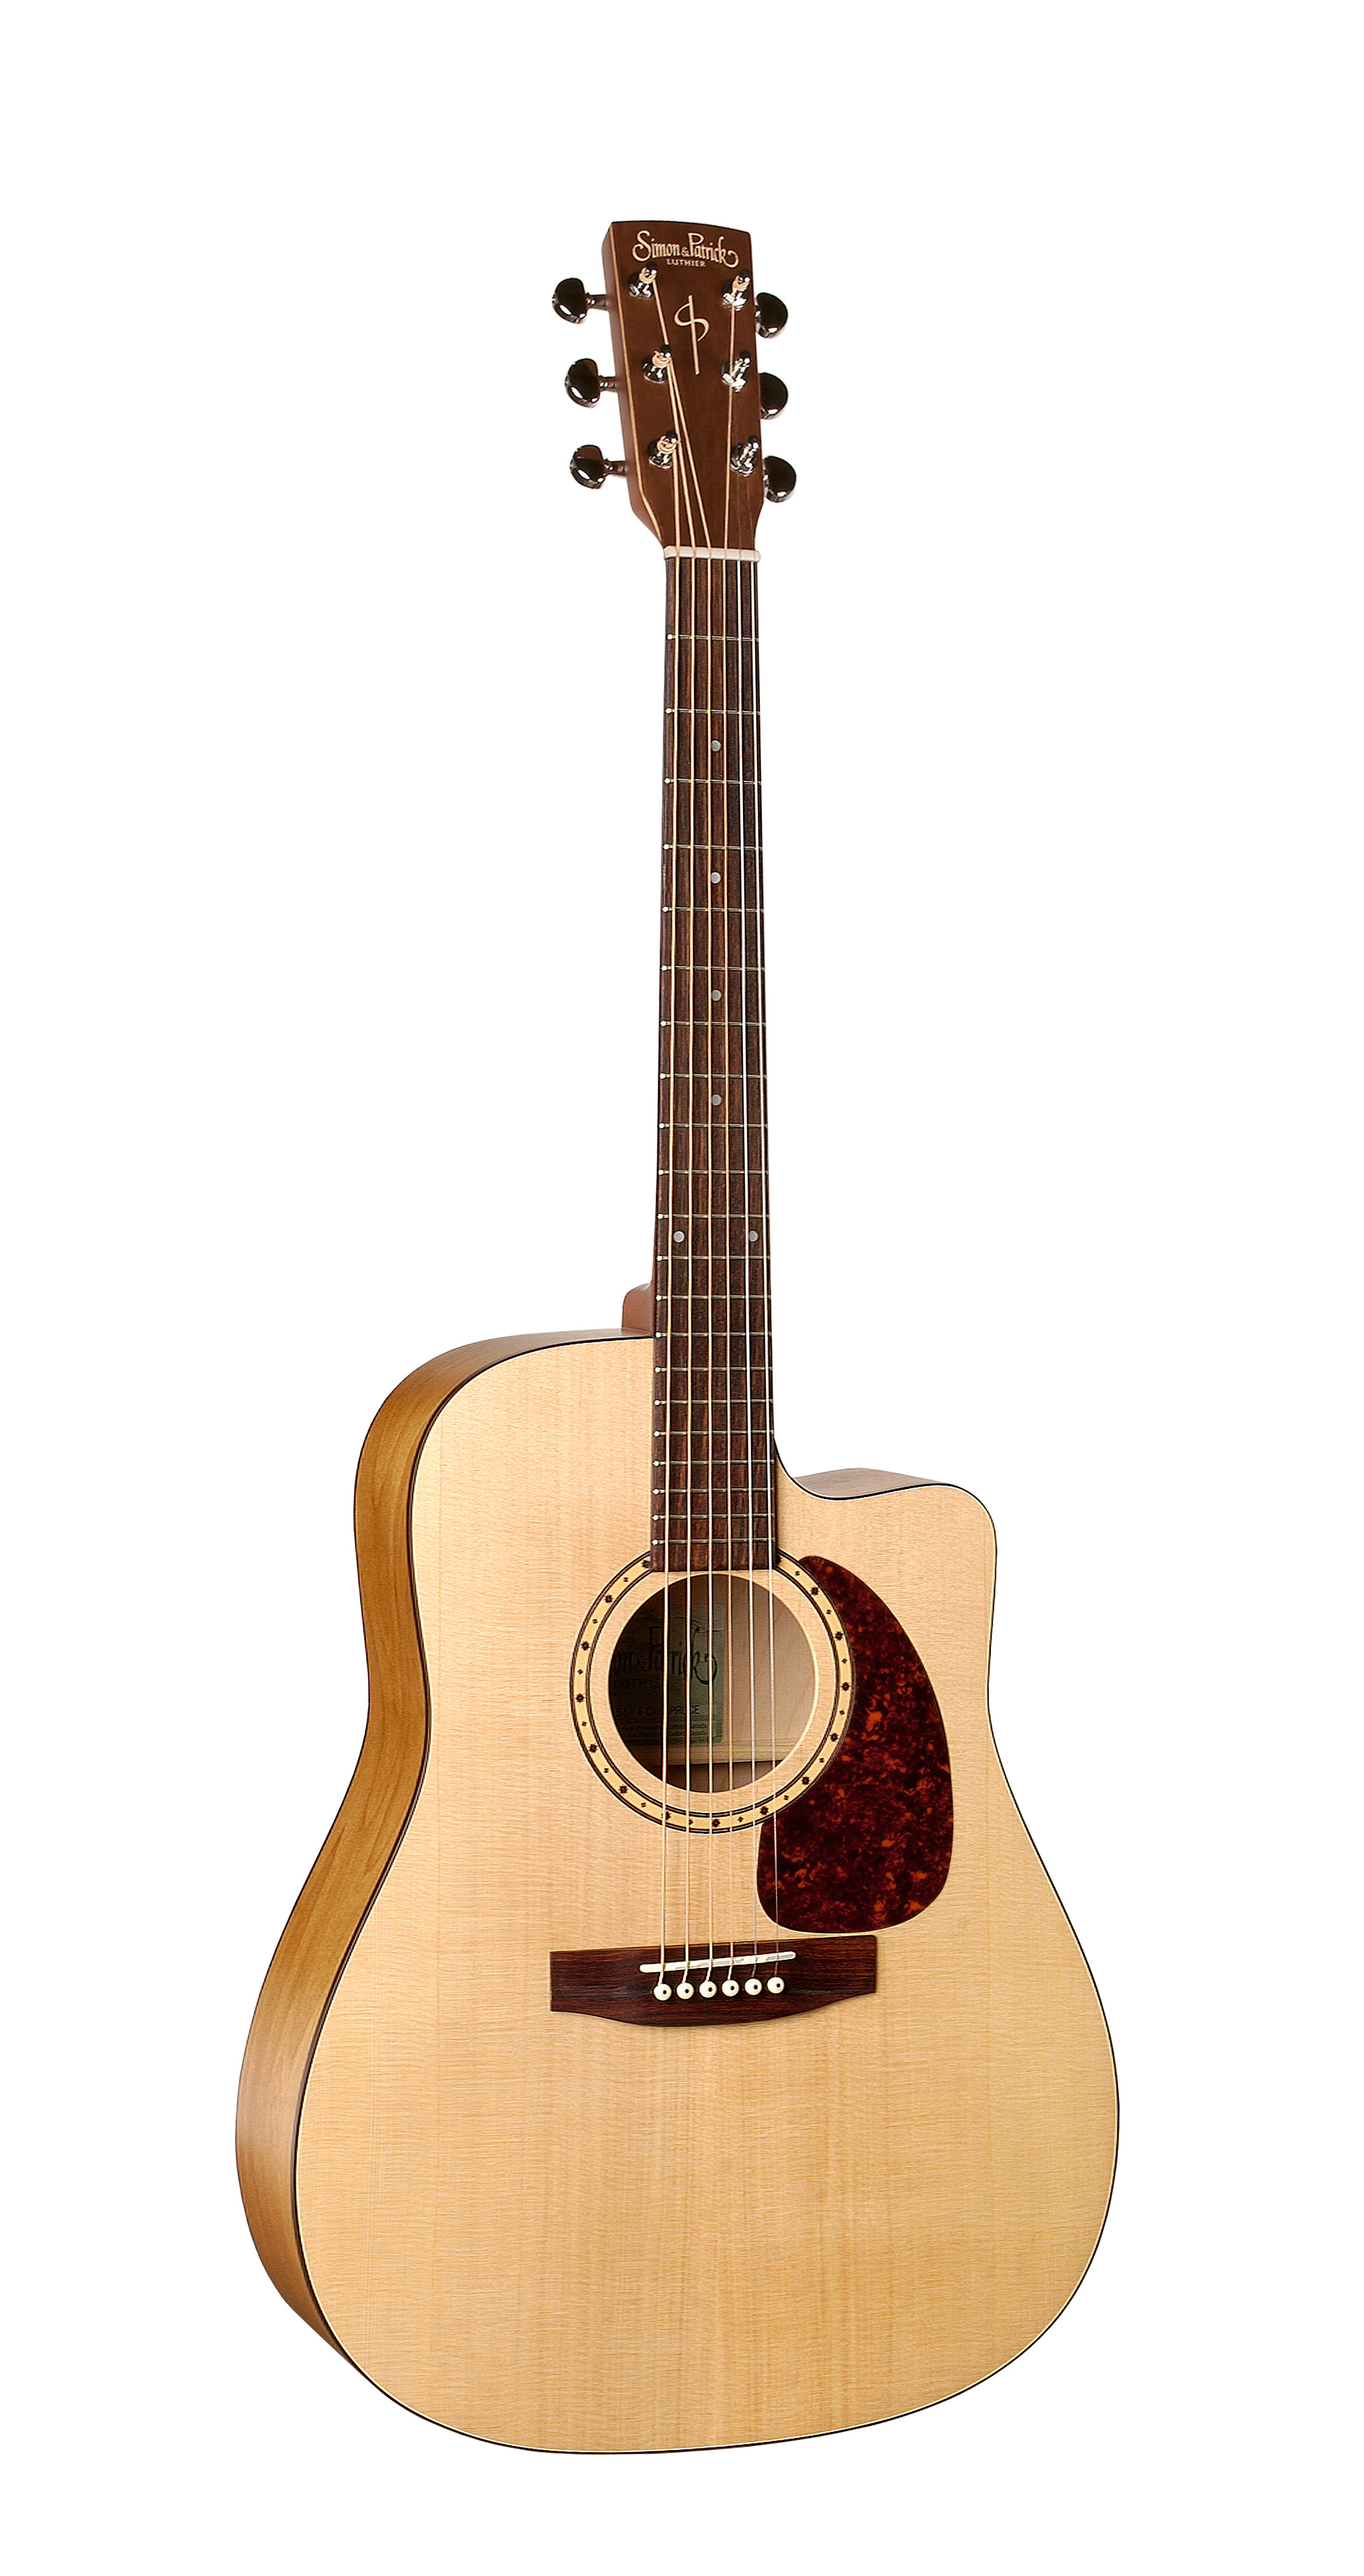 Simon & Patrick 29037 Woodland Spruce Cutaway Acoustic Guitar